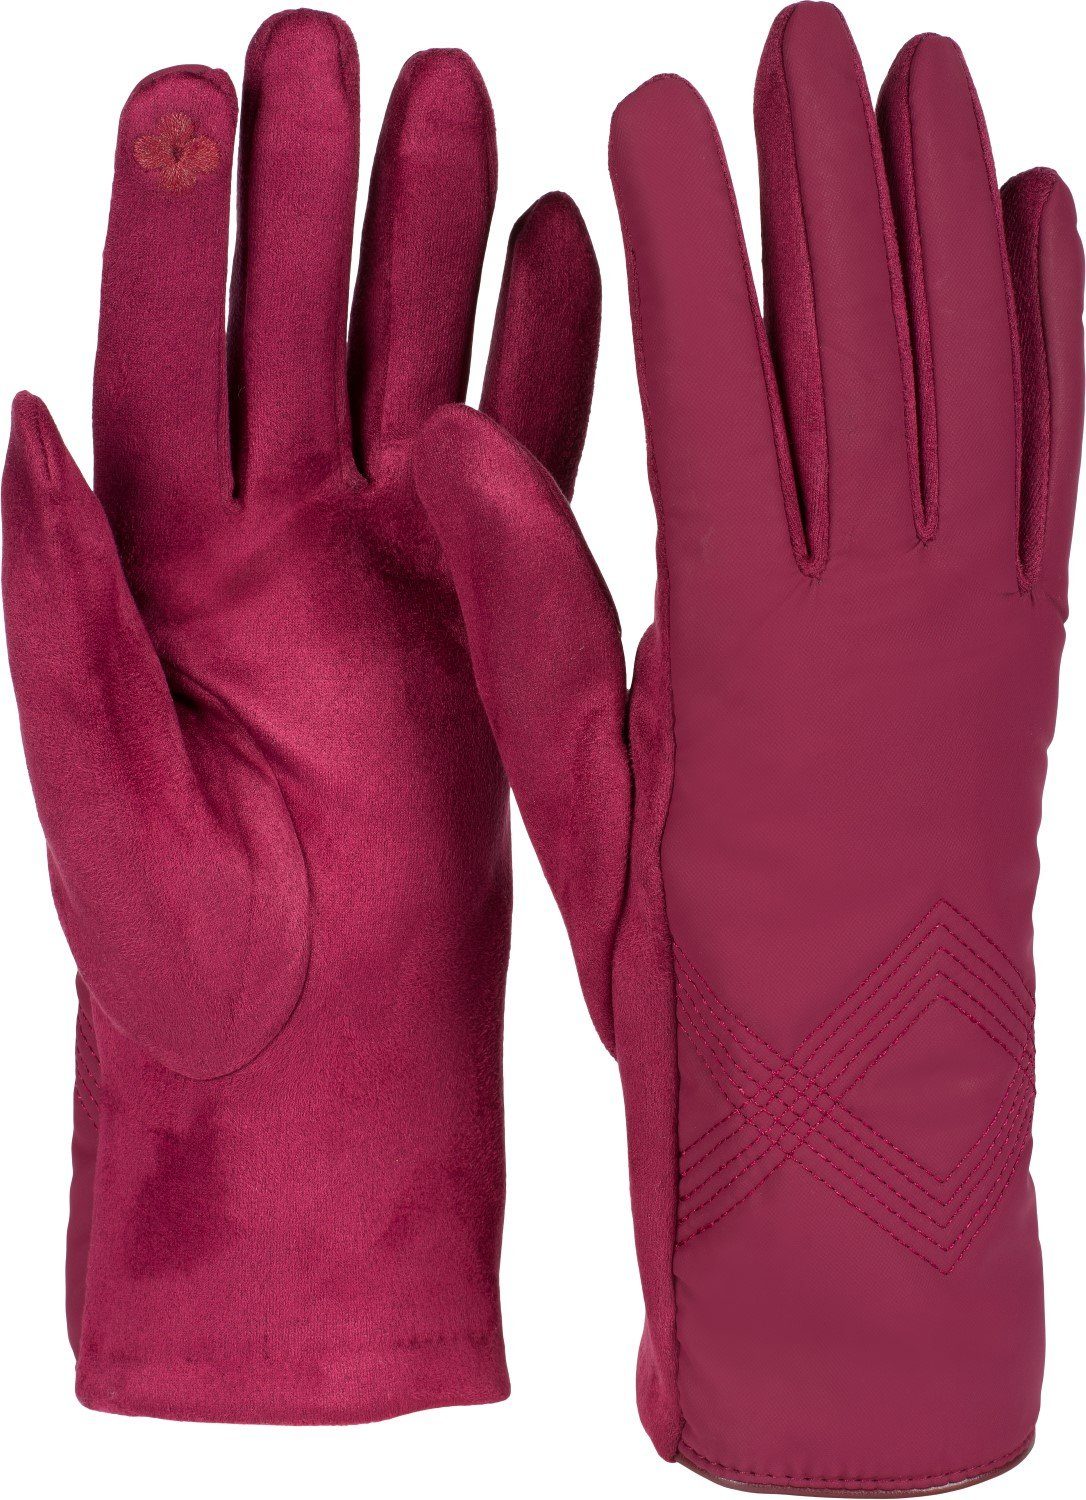 styleBREAKER Fleecehandschuhe Touchscreen Handschuhe Zick-Zack bestickt Bordeaux-Rot